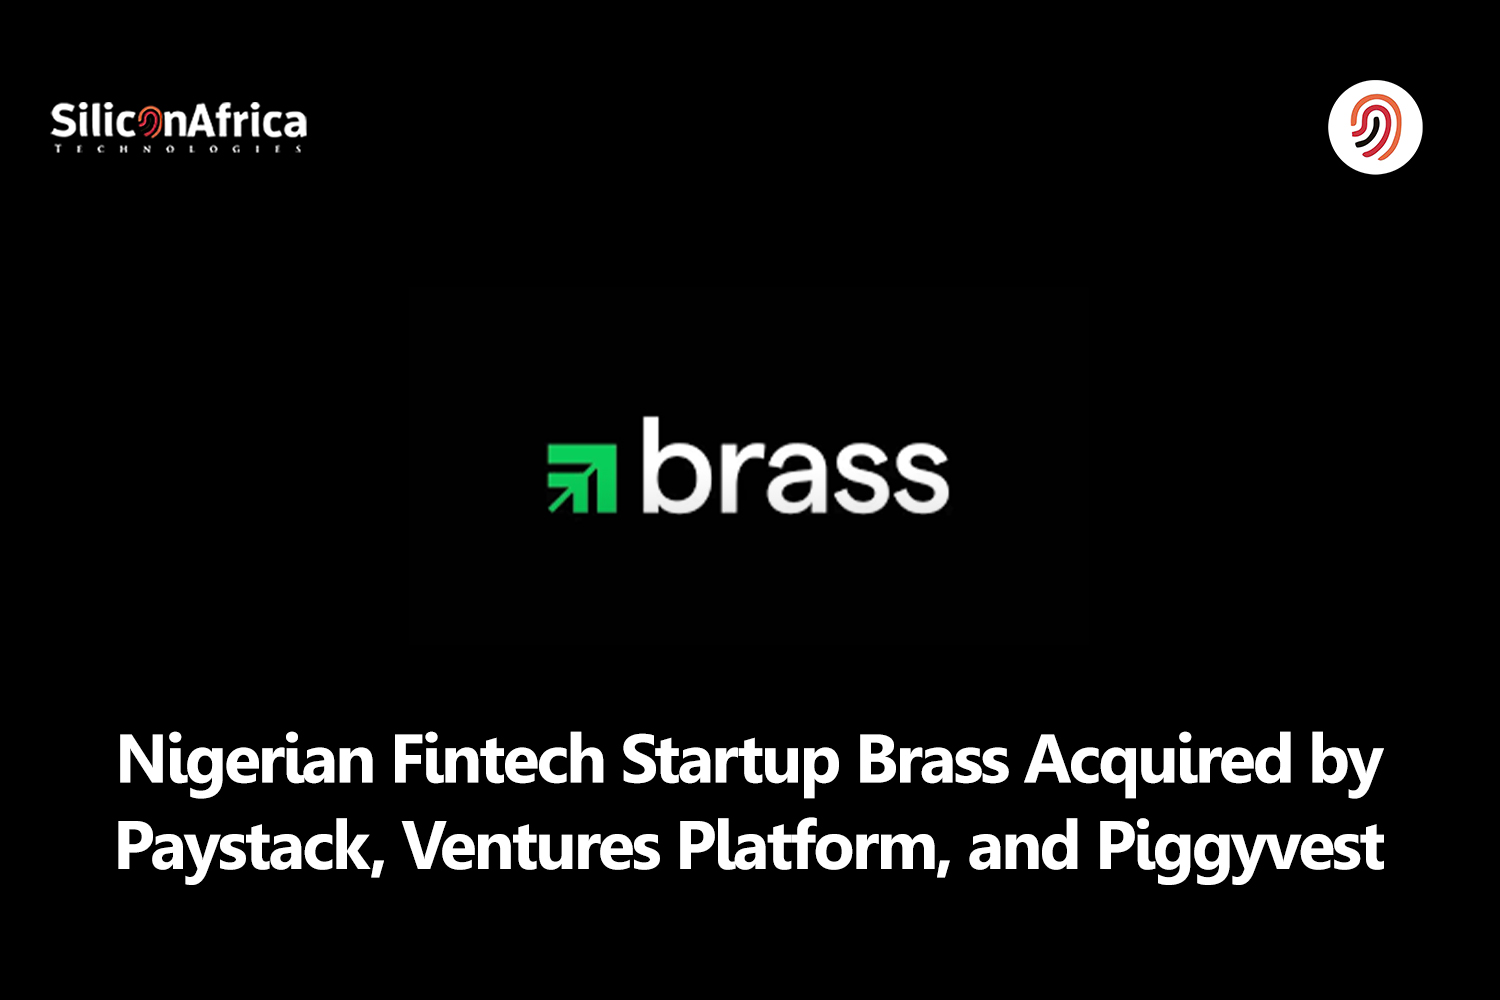 Nigerian fintech startup Brass acquired